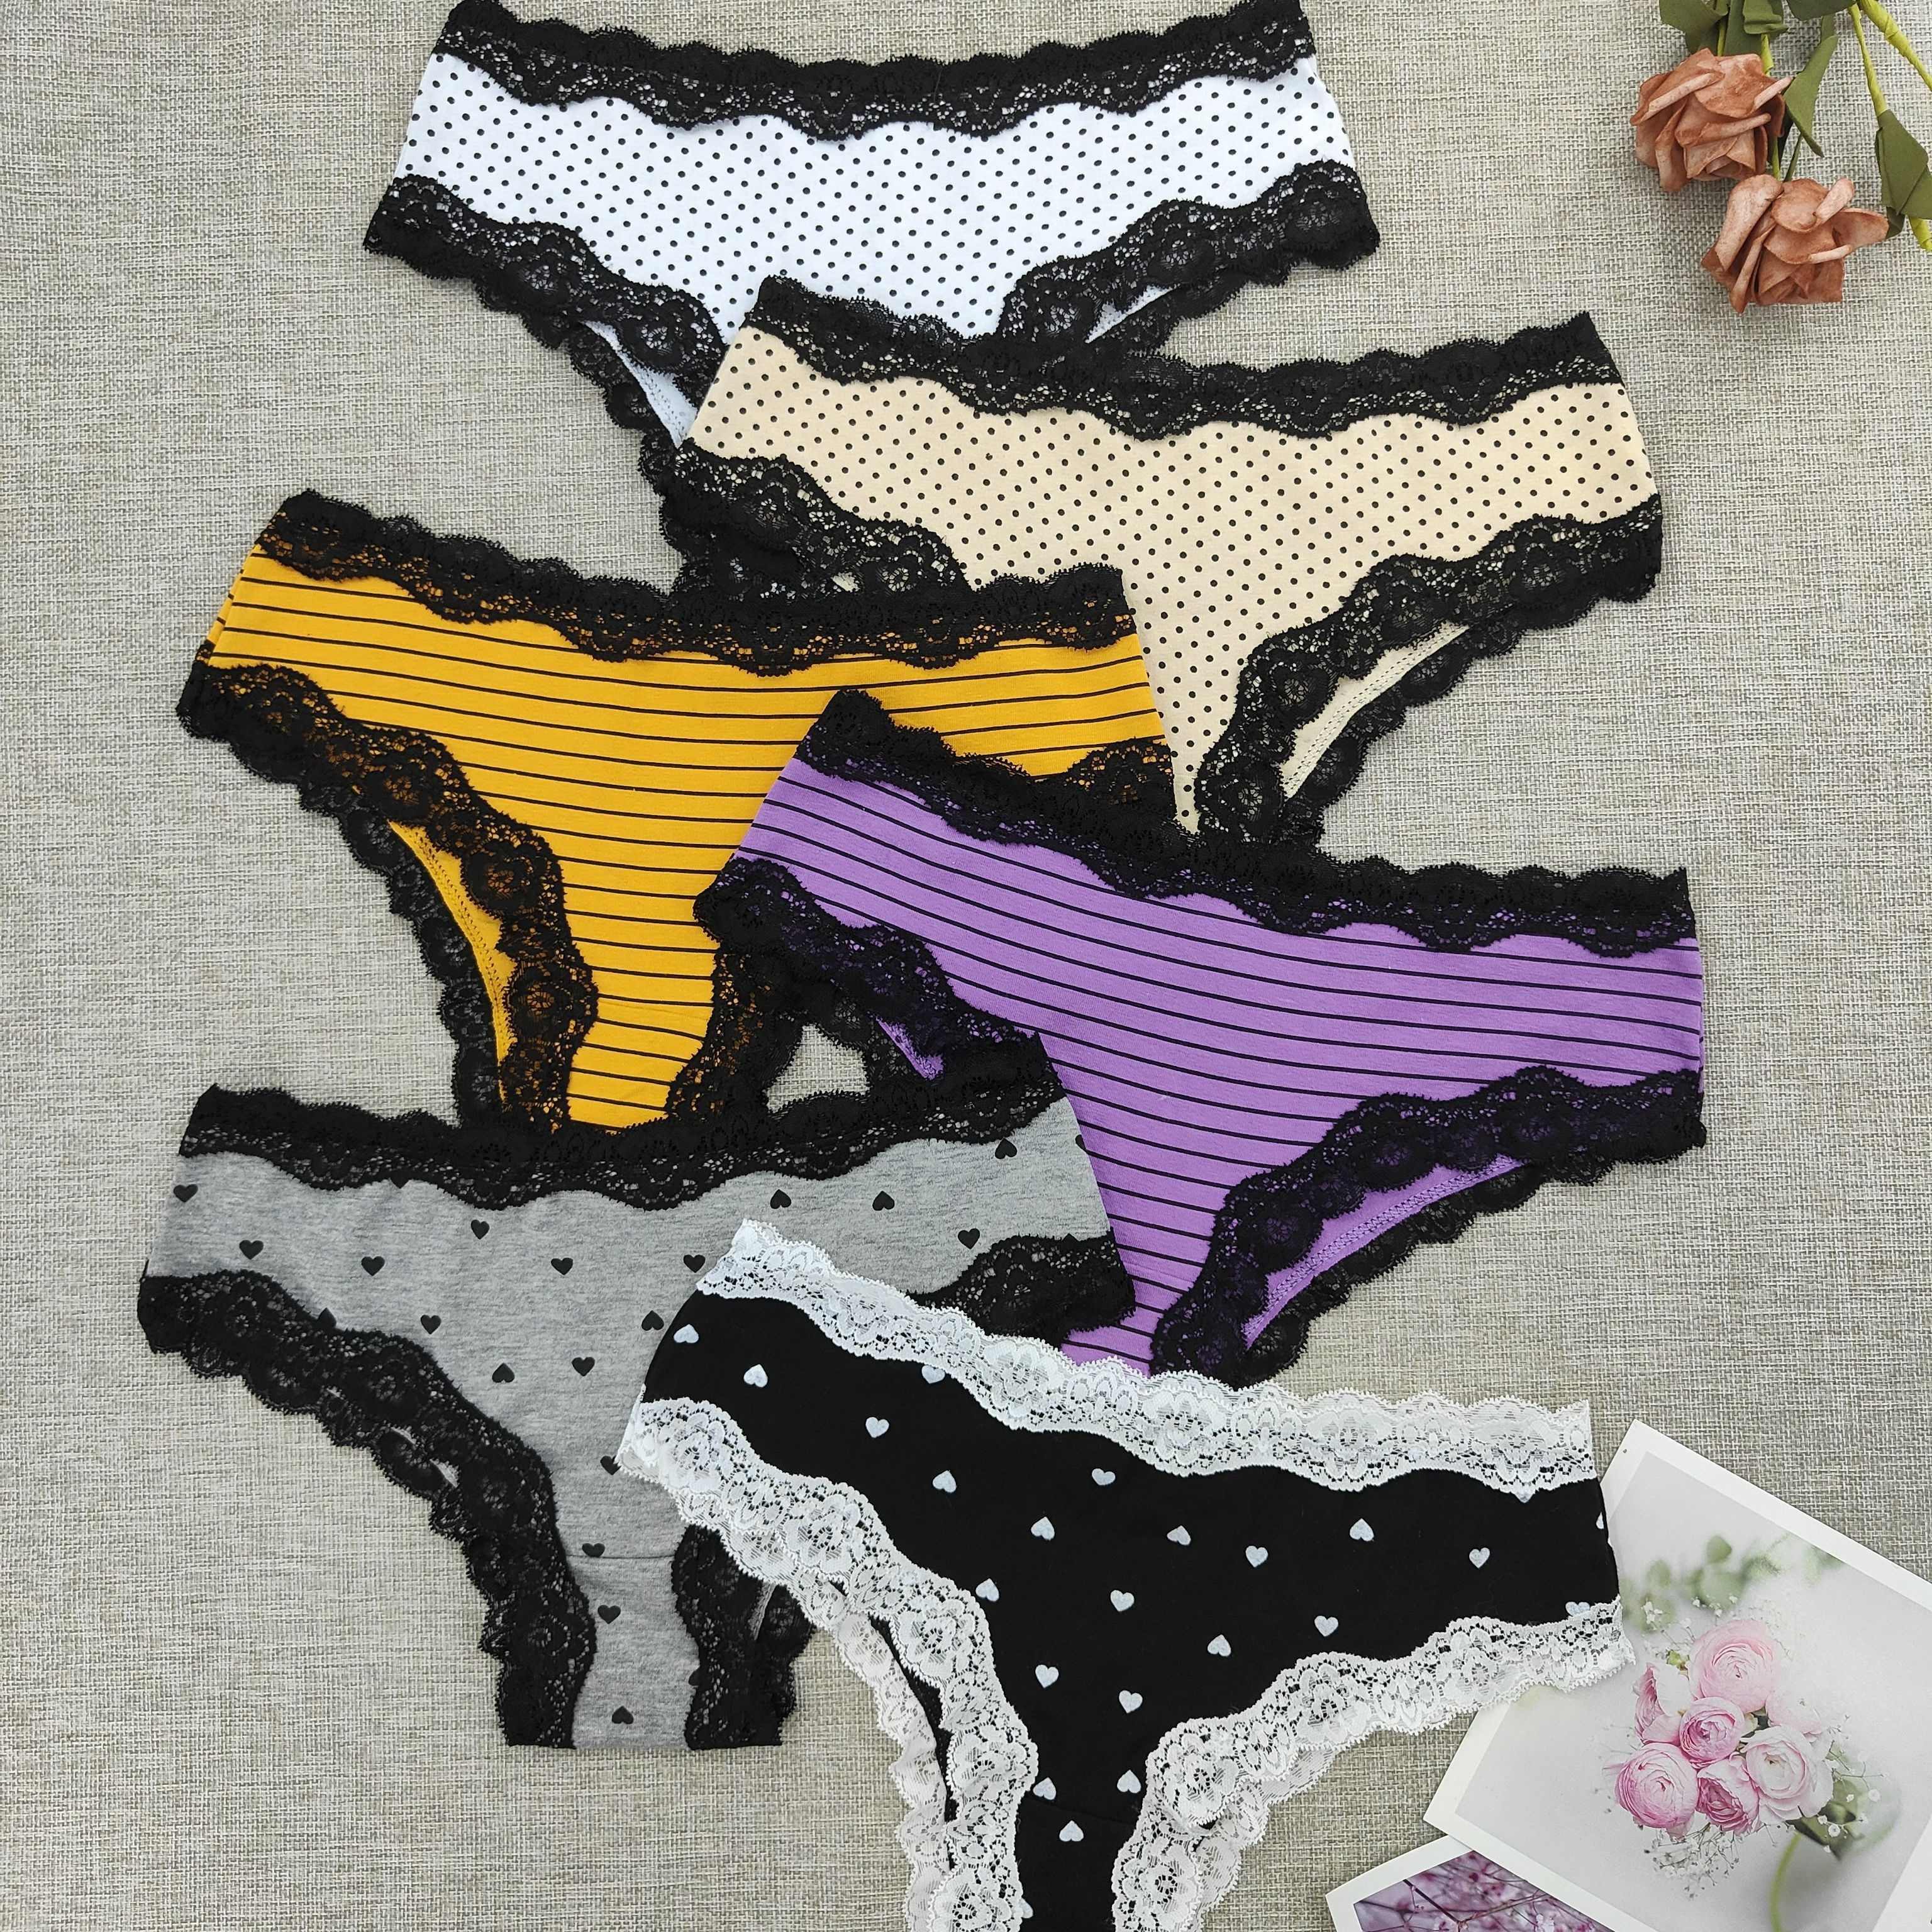 

6pcs Contrast Lace Briefs, Comfy & Breathable Stretchy Intimates Panties, Women's Lingerie & Underwear